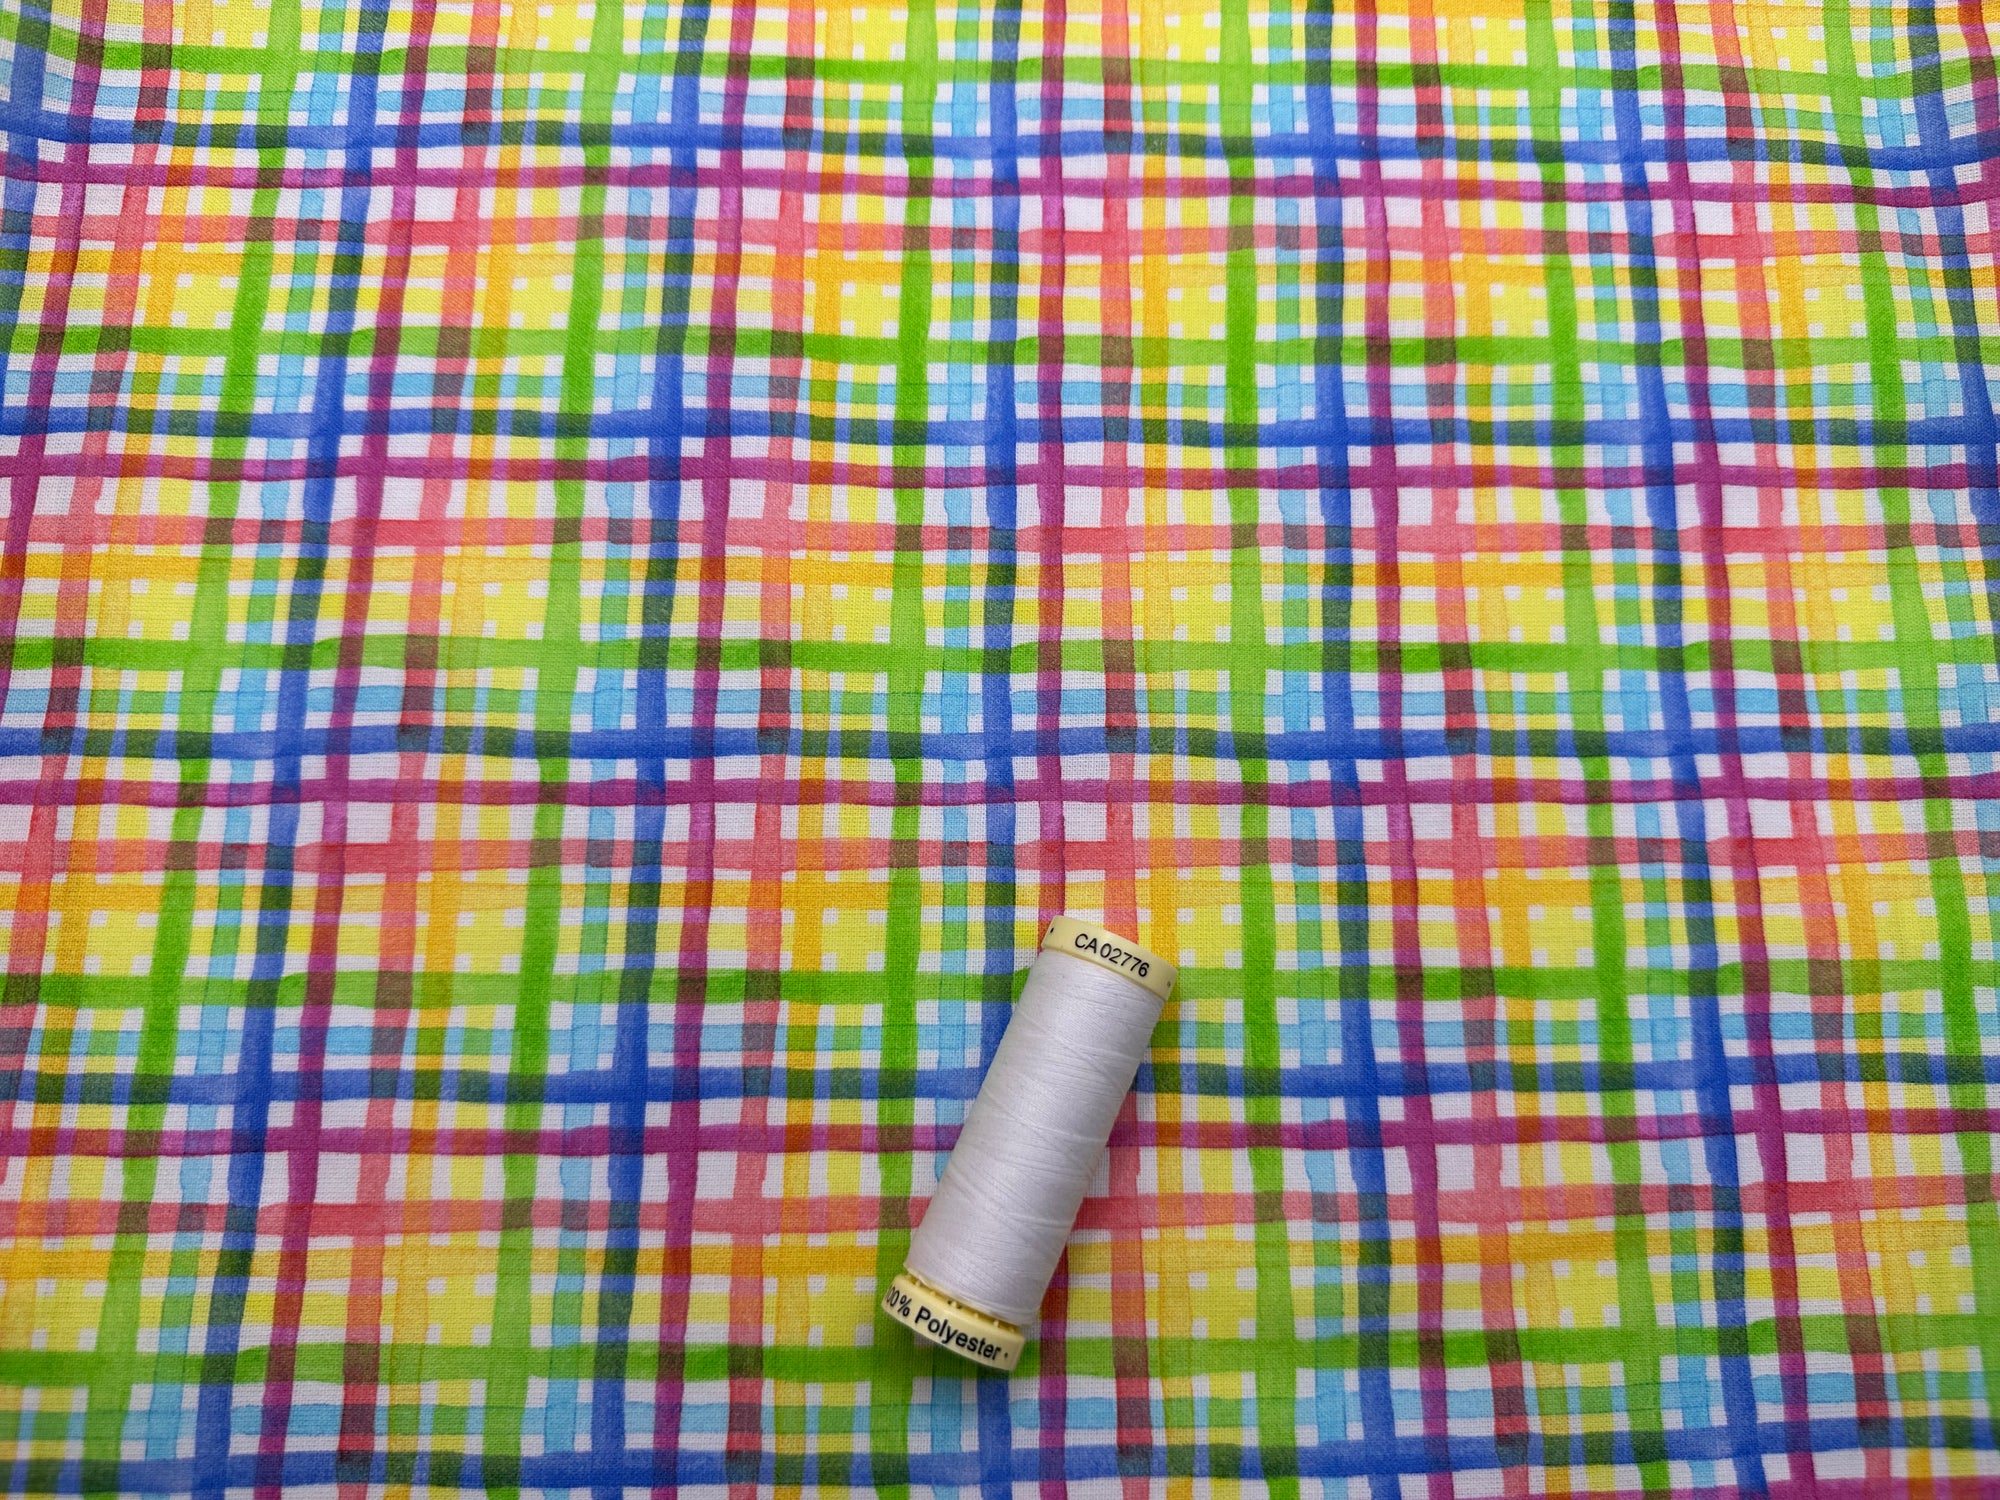 Rainbow Grid Check Bright Multi Colors 100% Cotton Digital Print